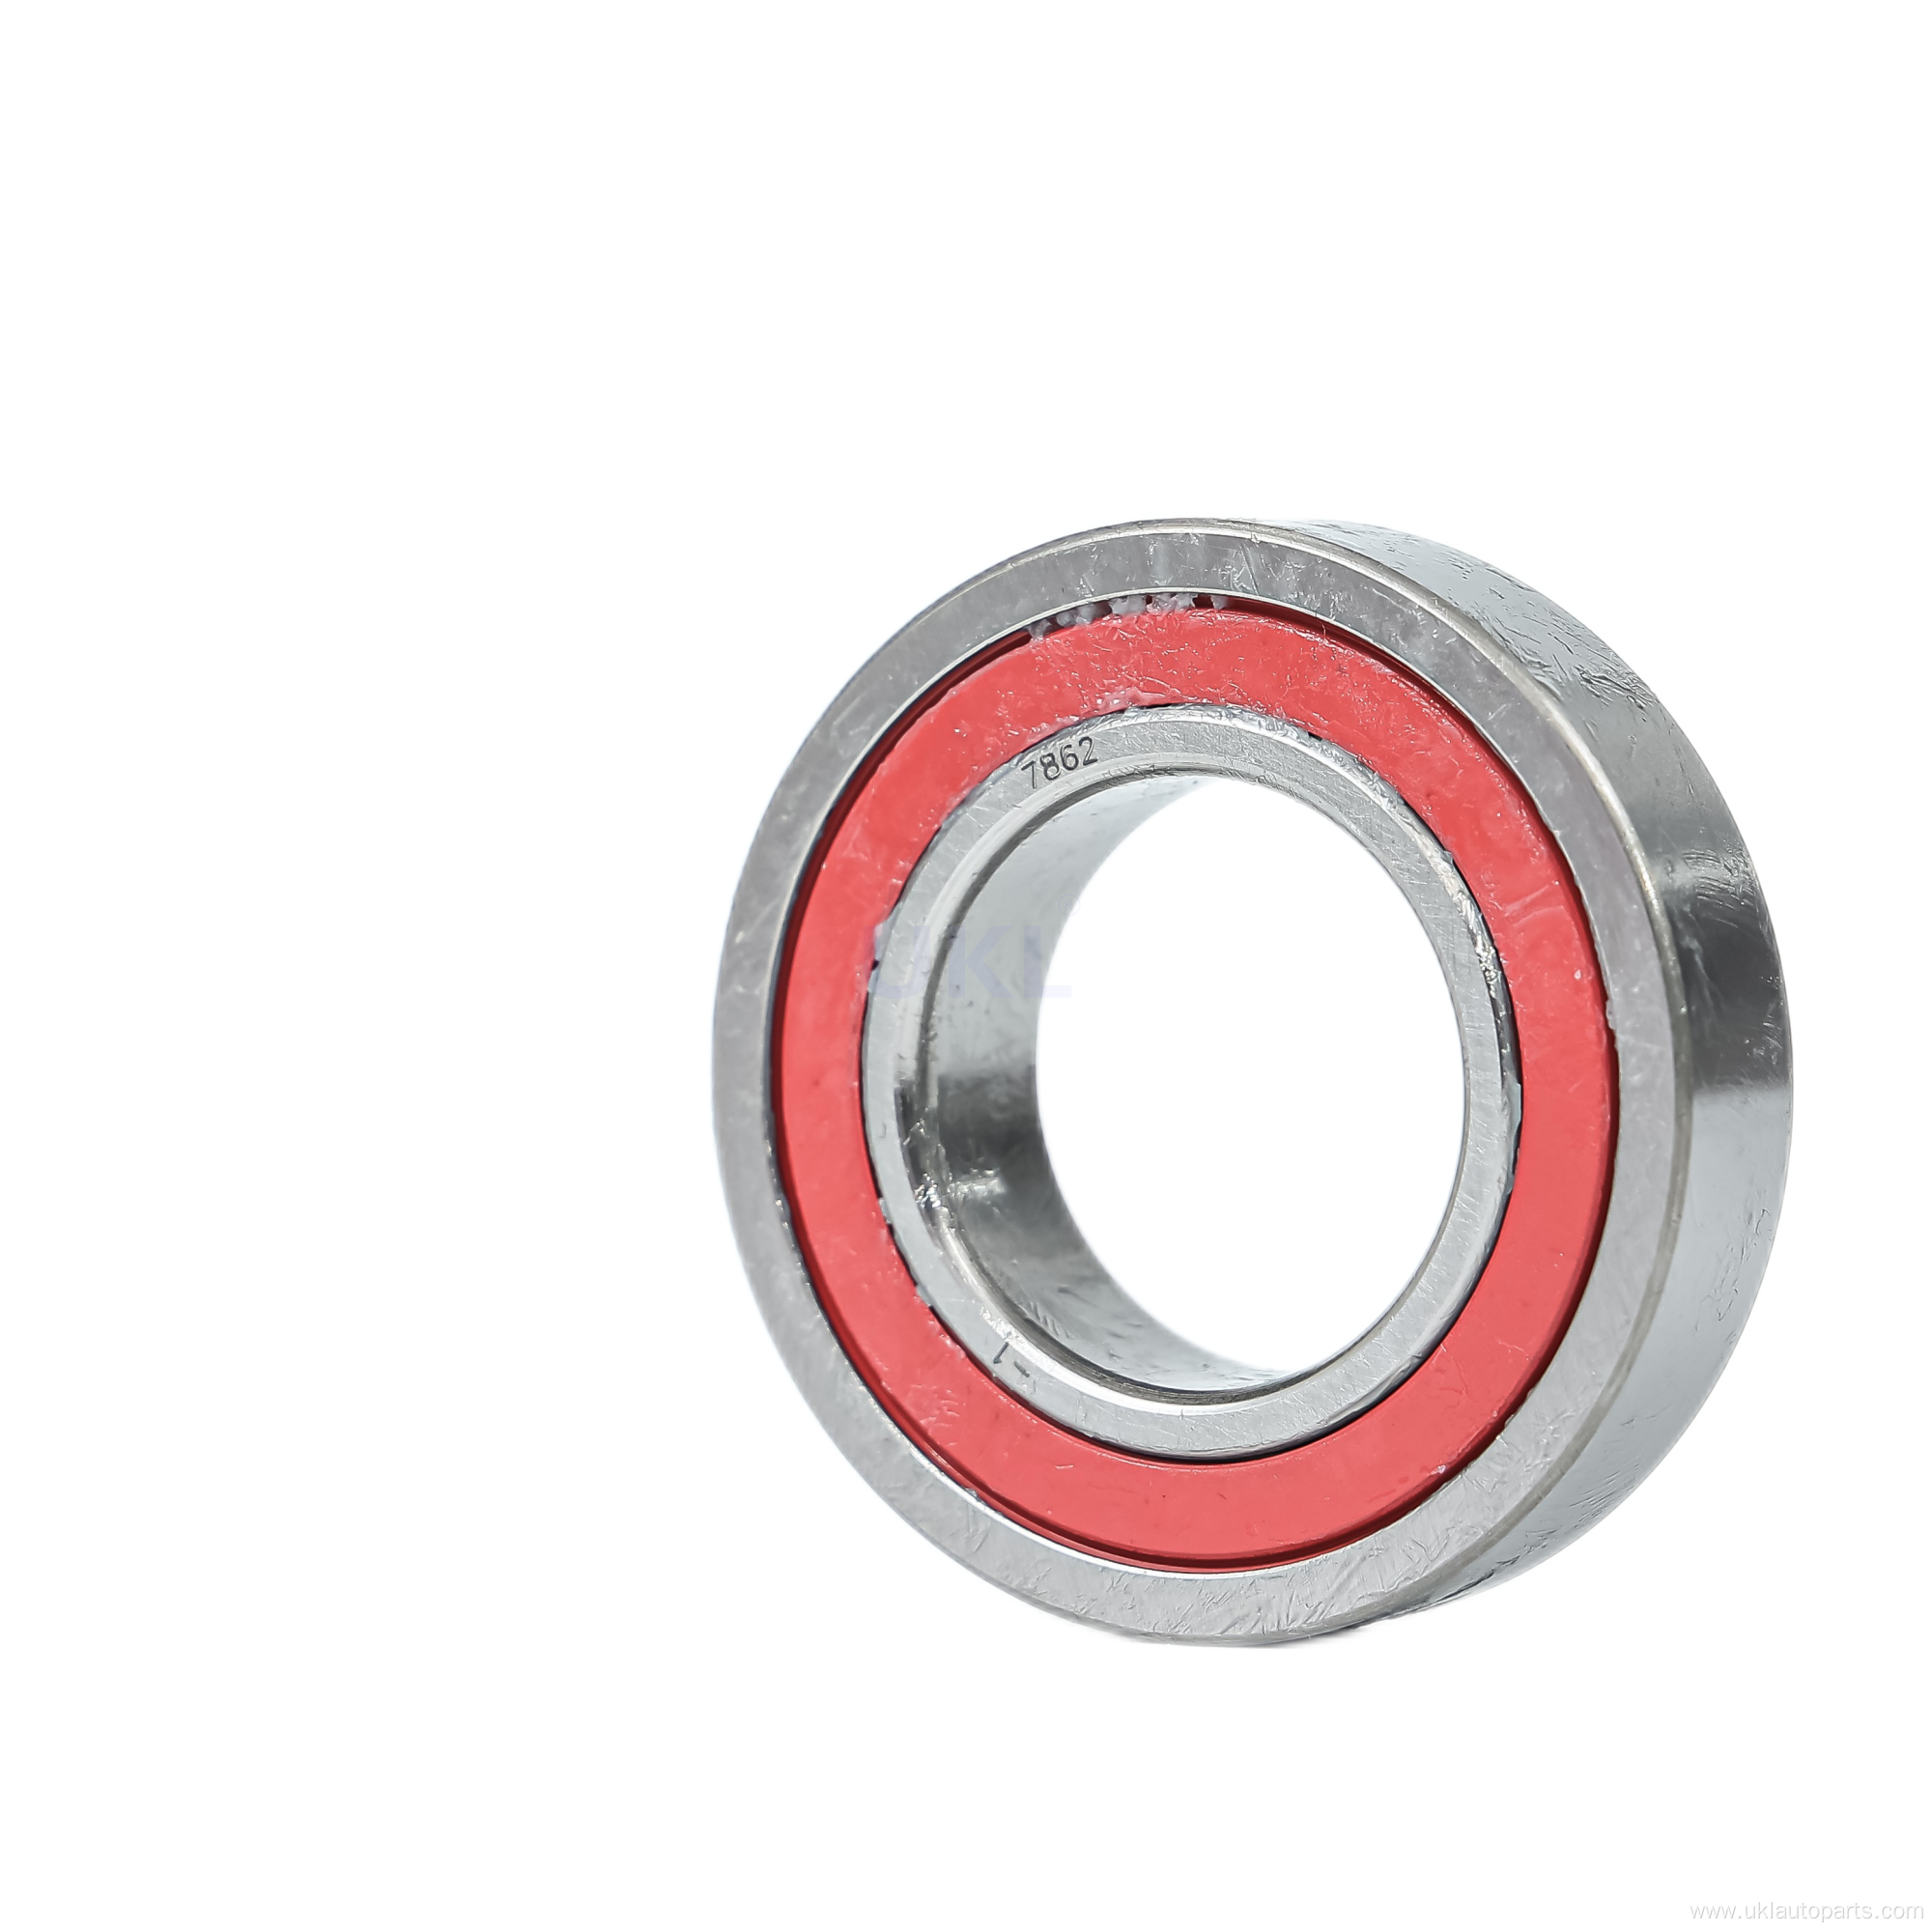 QJ 238 240 248N2MA angular contact ball bearings